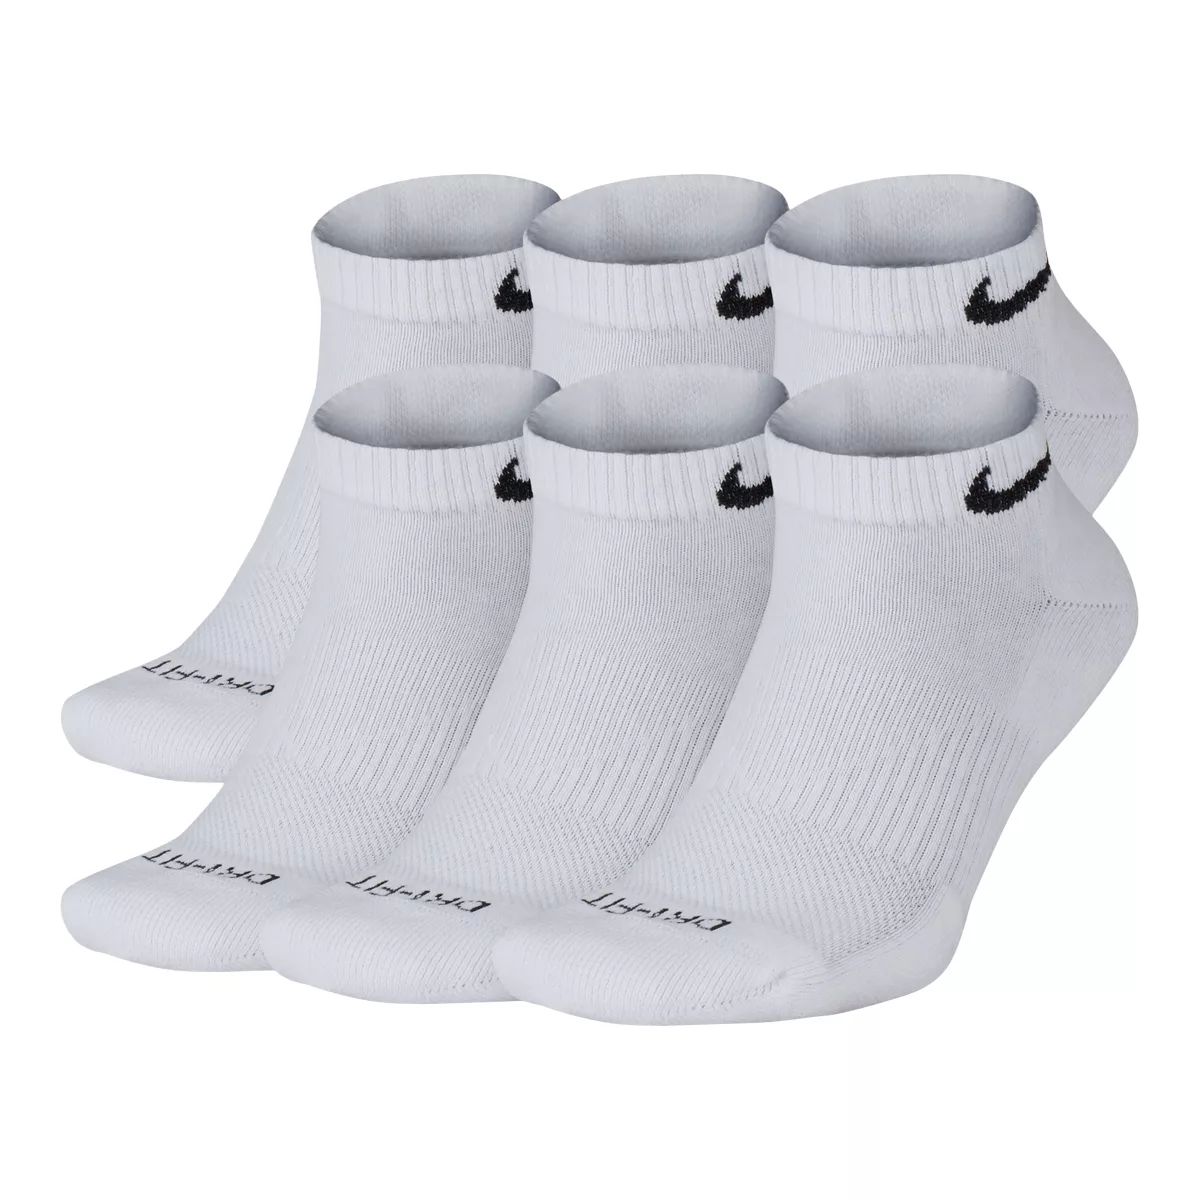 Nike Everyday Plus Cushioned Socks - 3 Pack Black / White – size? Canada